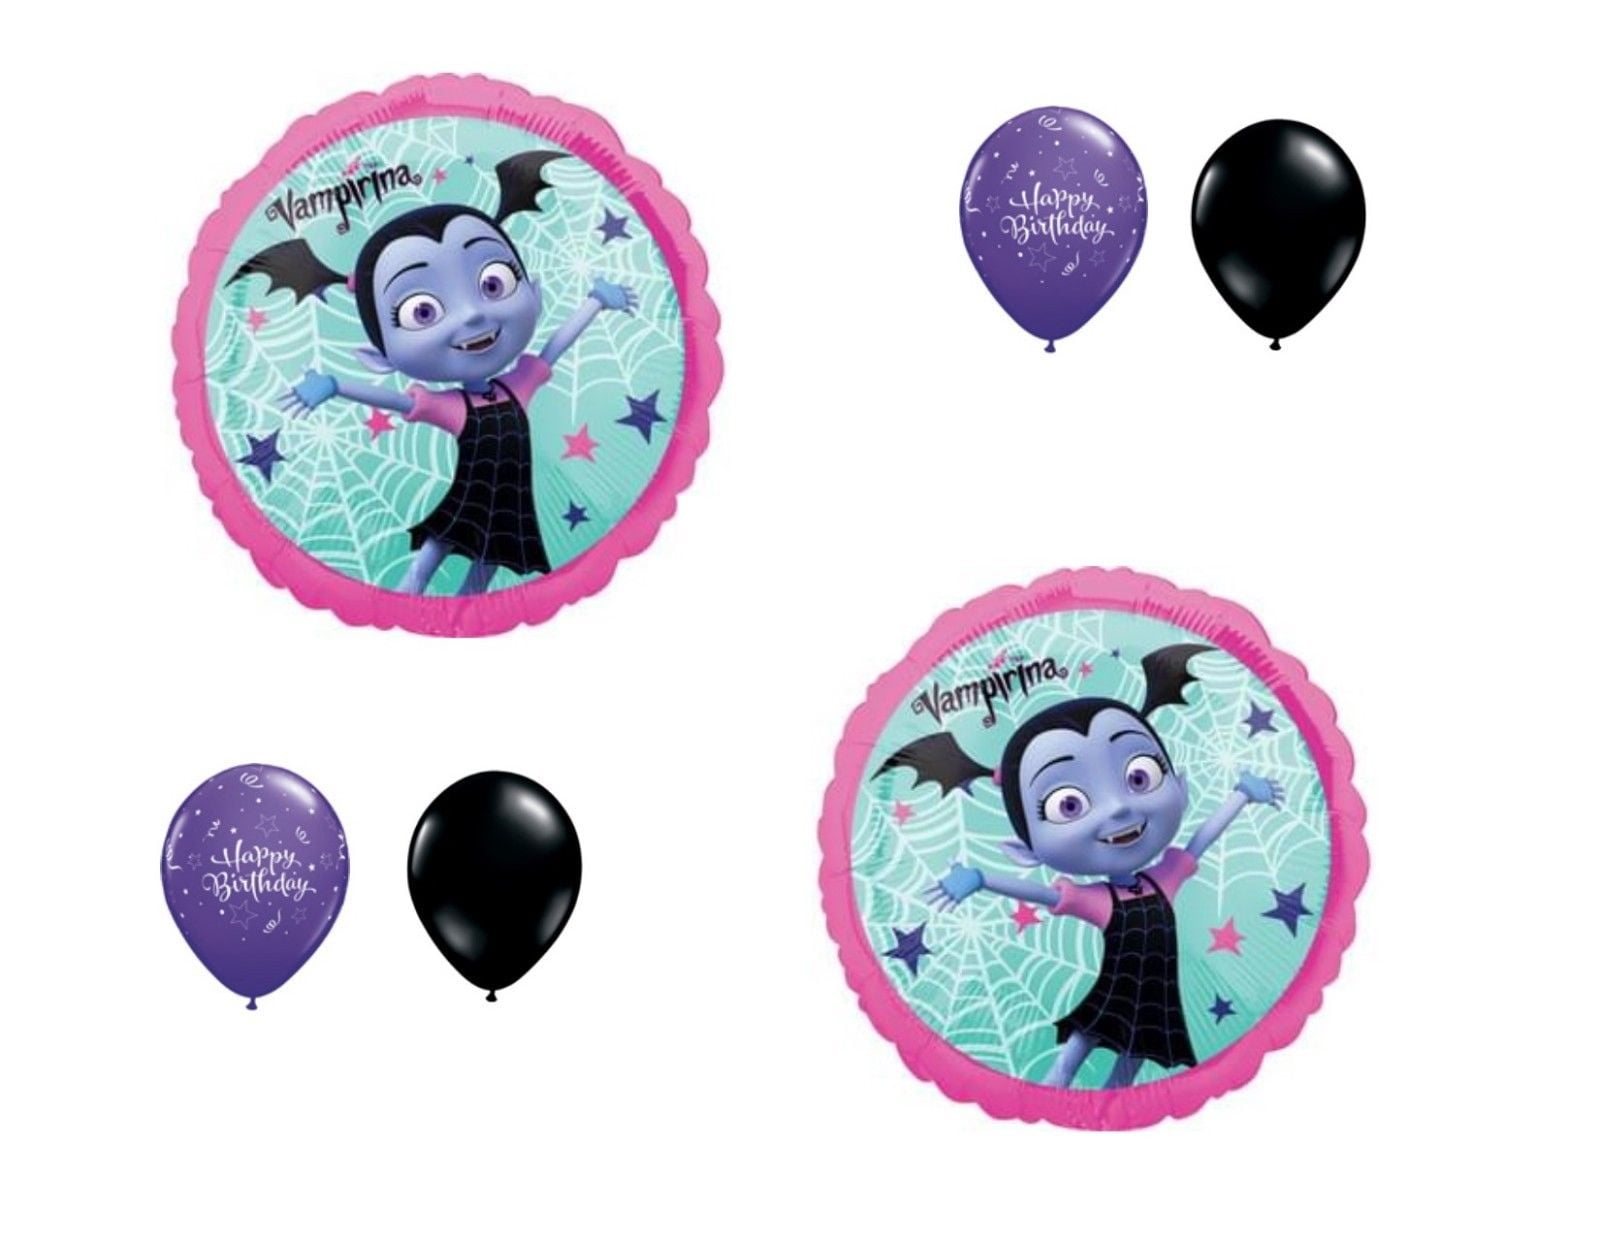 Mayflower Products Vampirina 5th Birthday Party Supplies Balloon Bouquet 